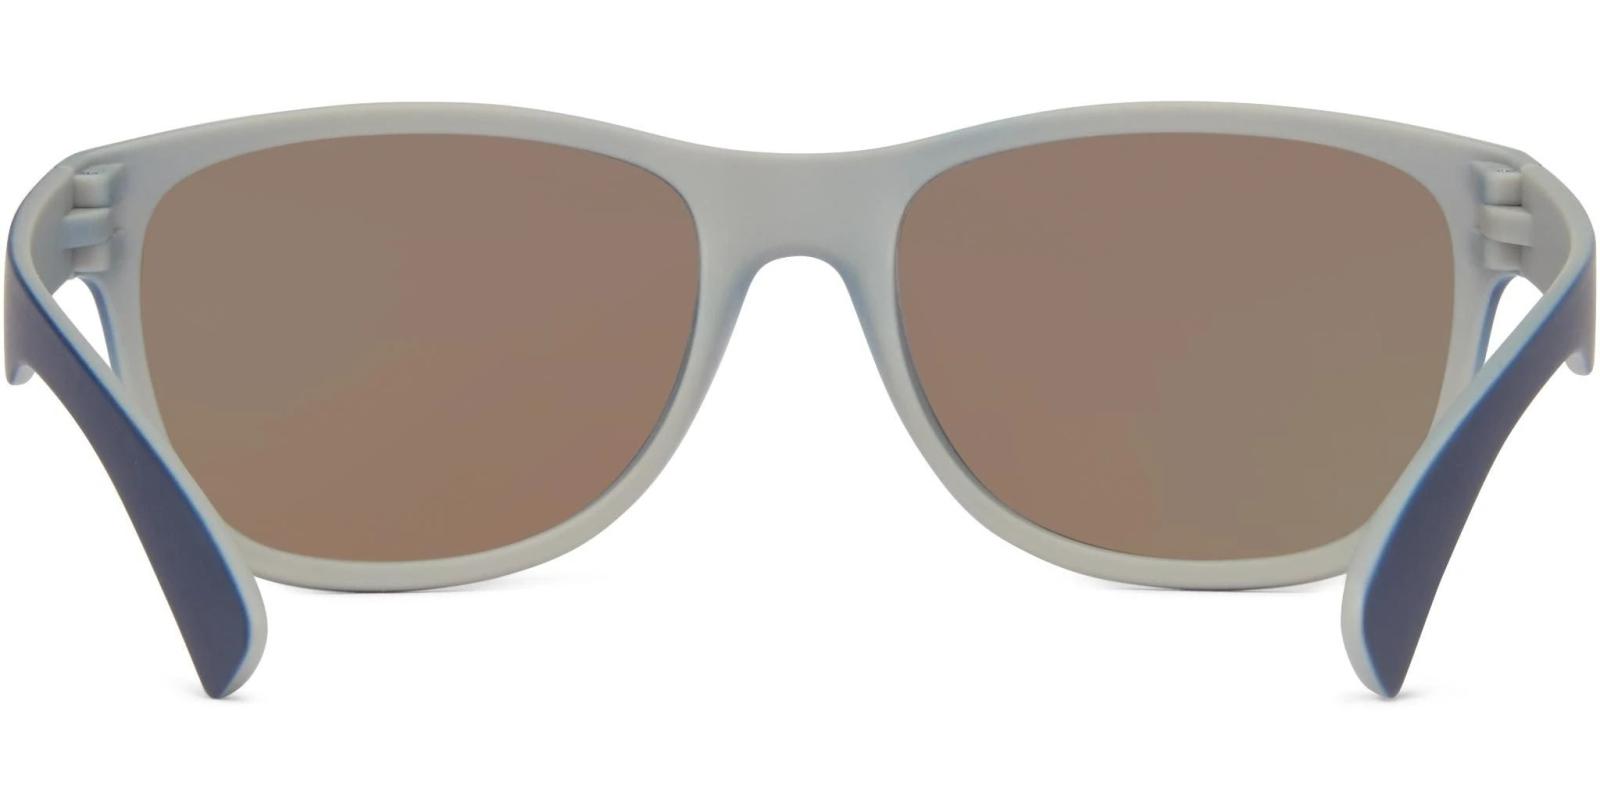 icu Eyewear Arc Sunglasses